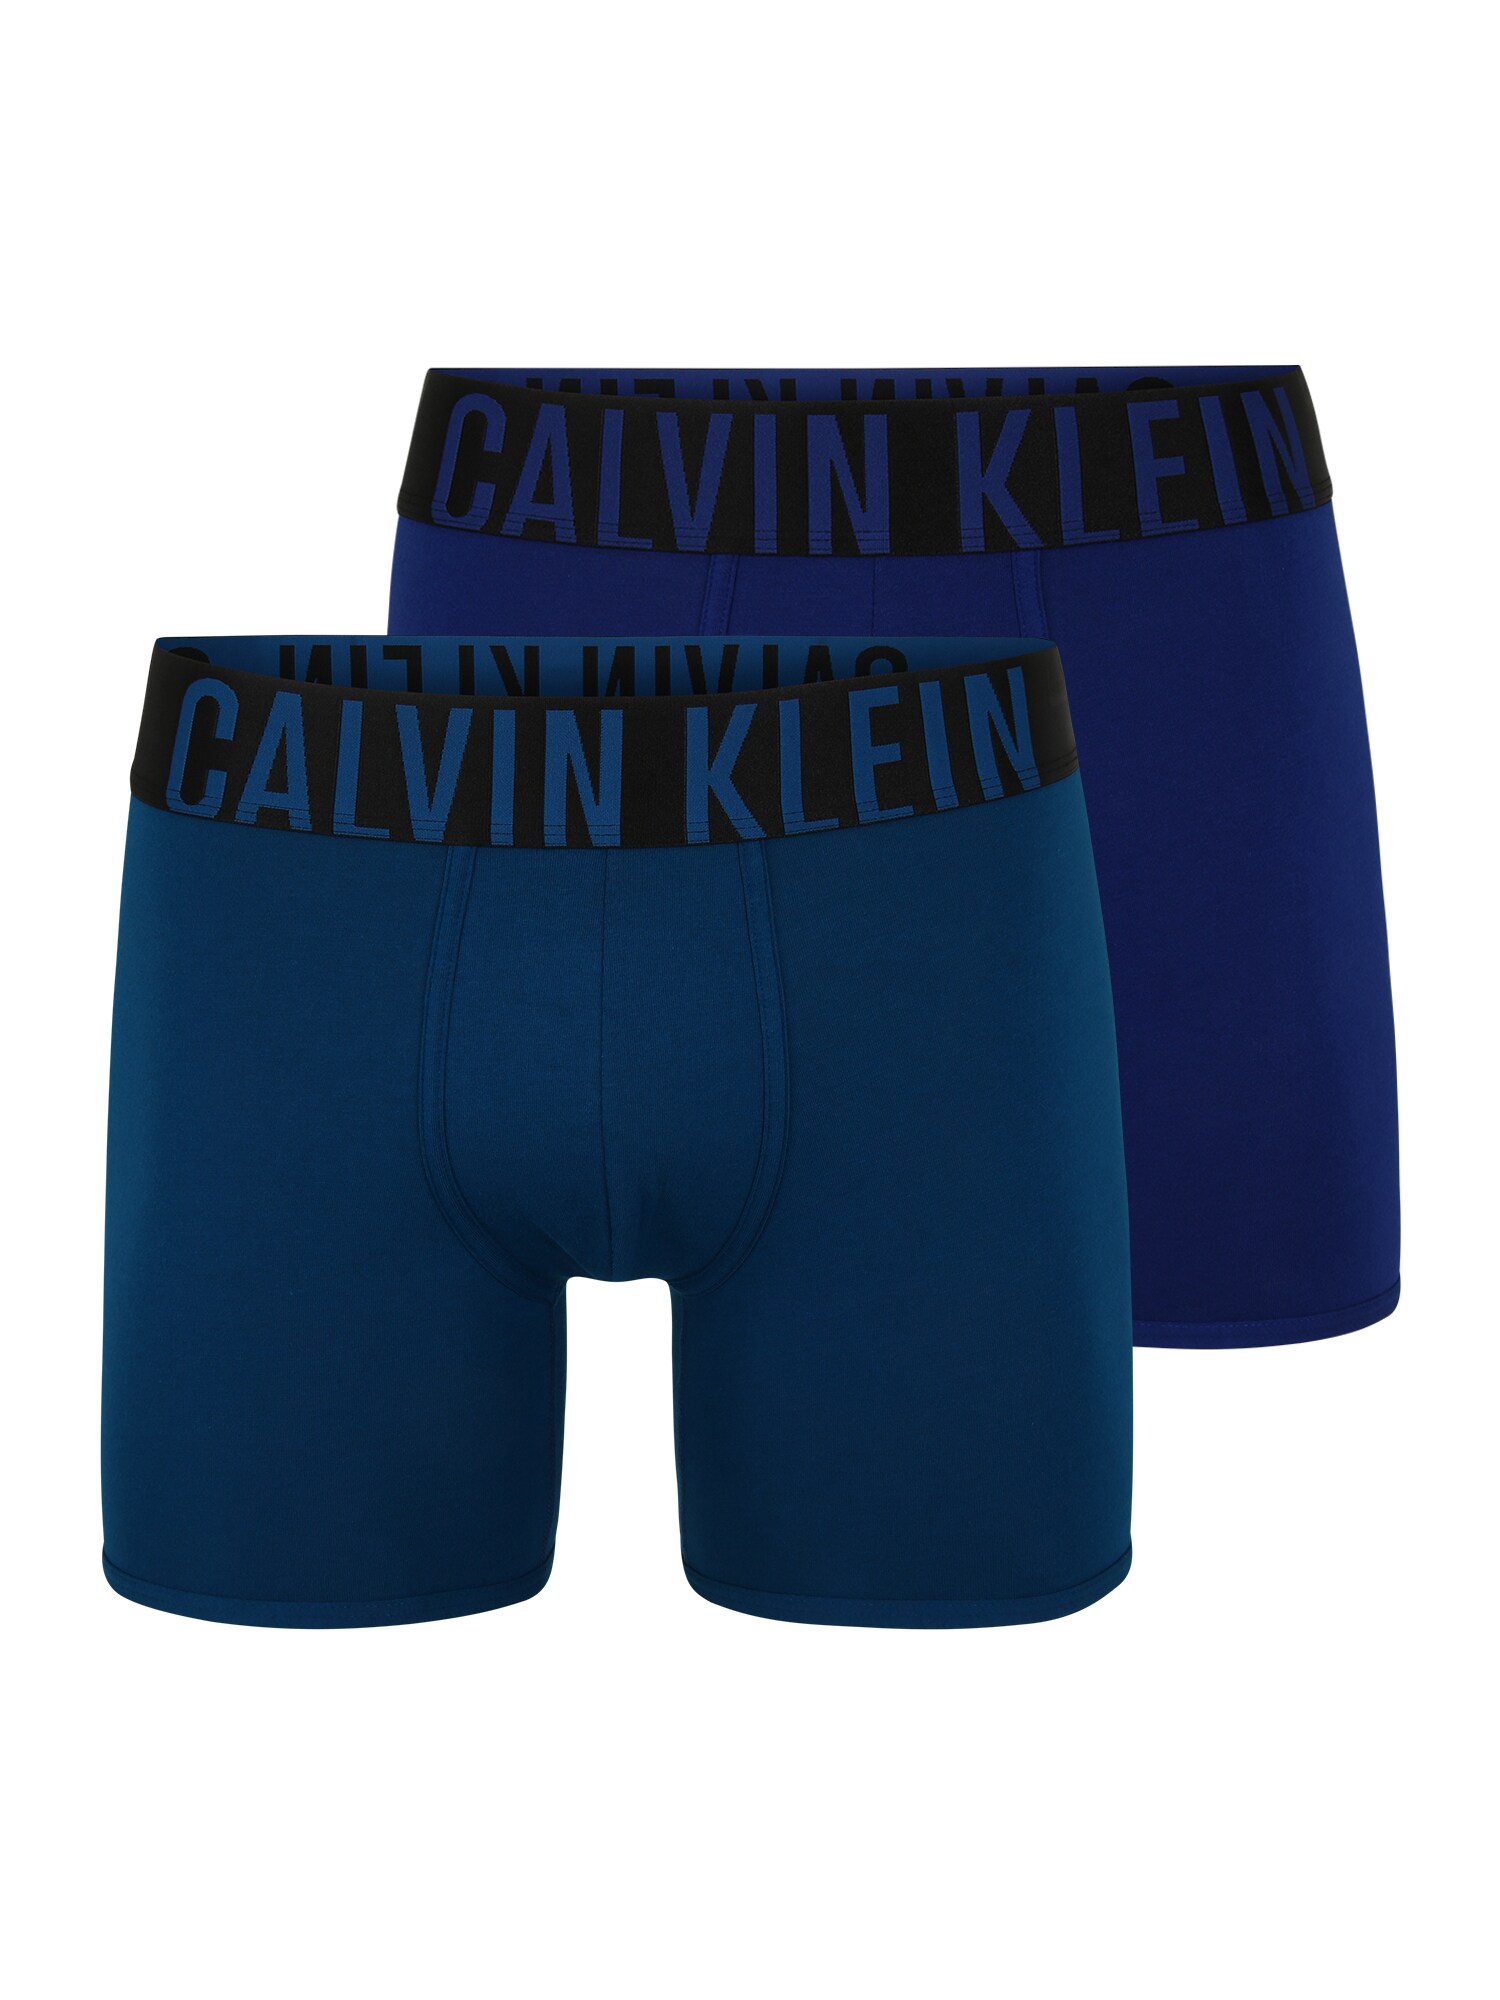 Calvin Klein Underwear Boxer trumpikės  tamsiai mėlyna / juoda